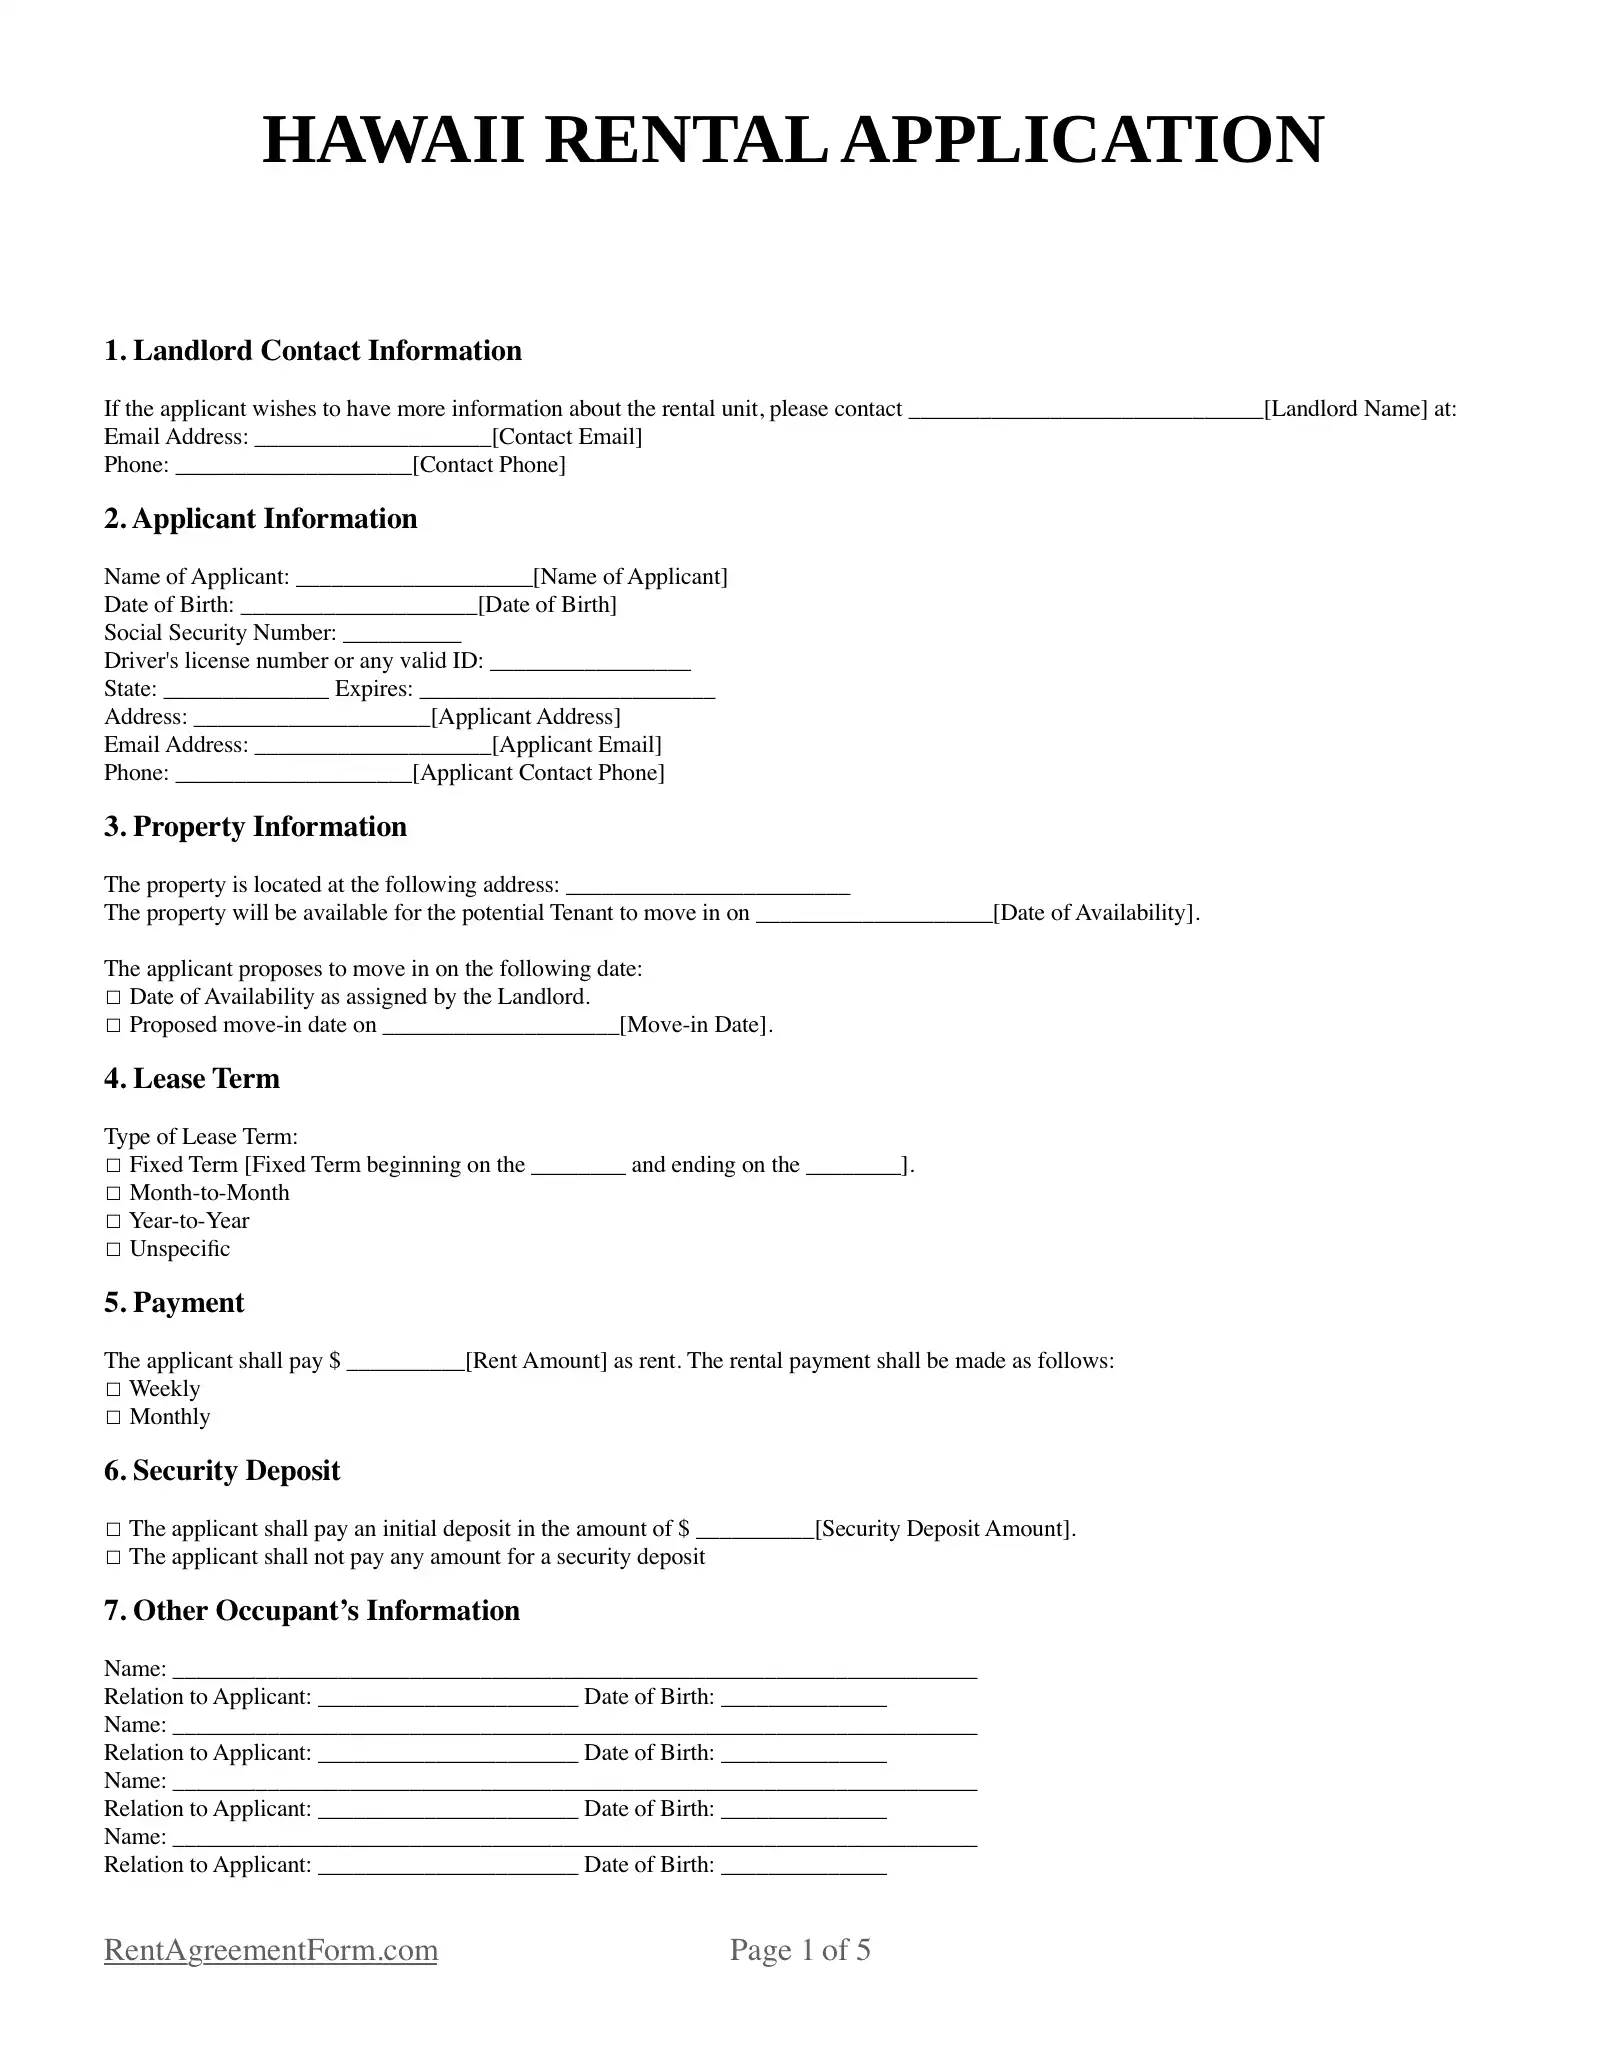 Hawaii Rental Application Sample